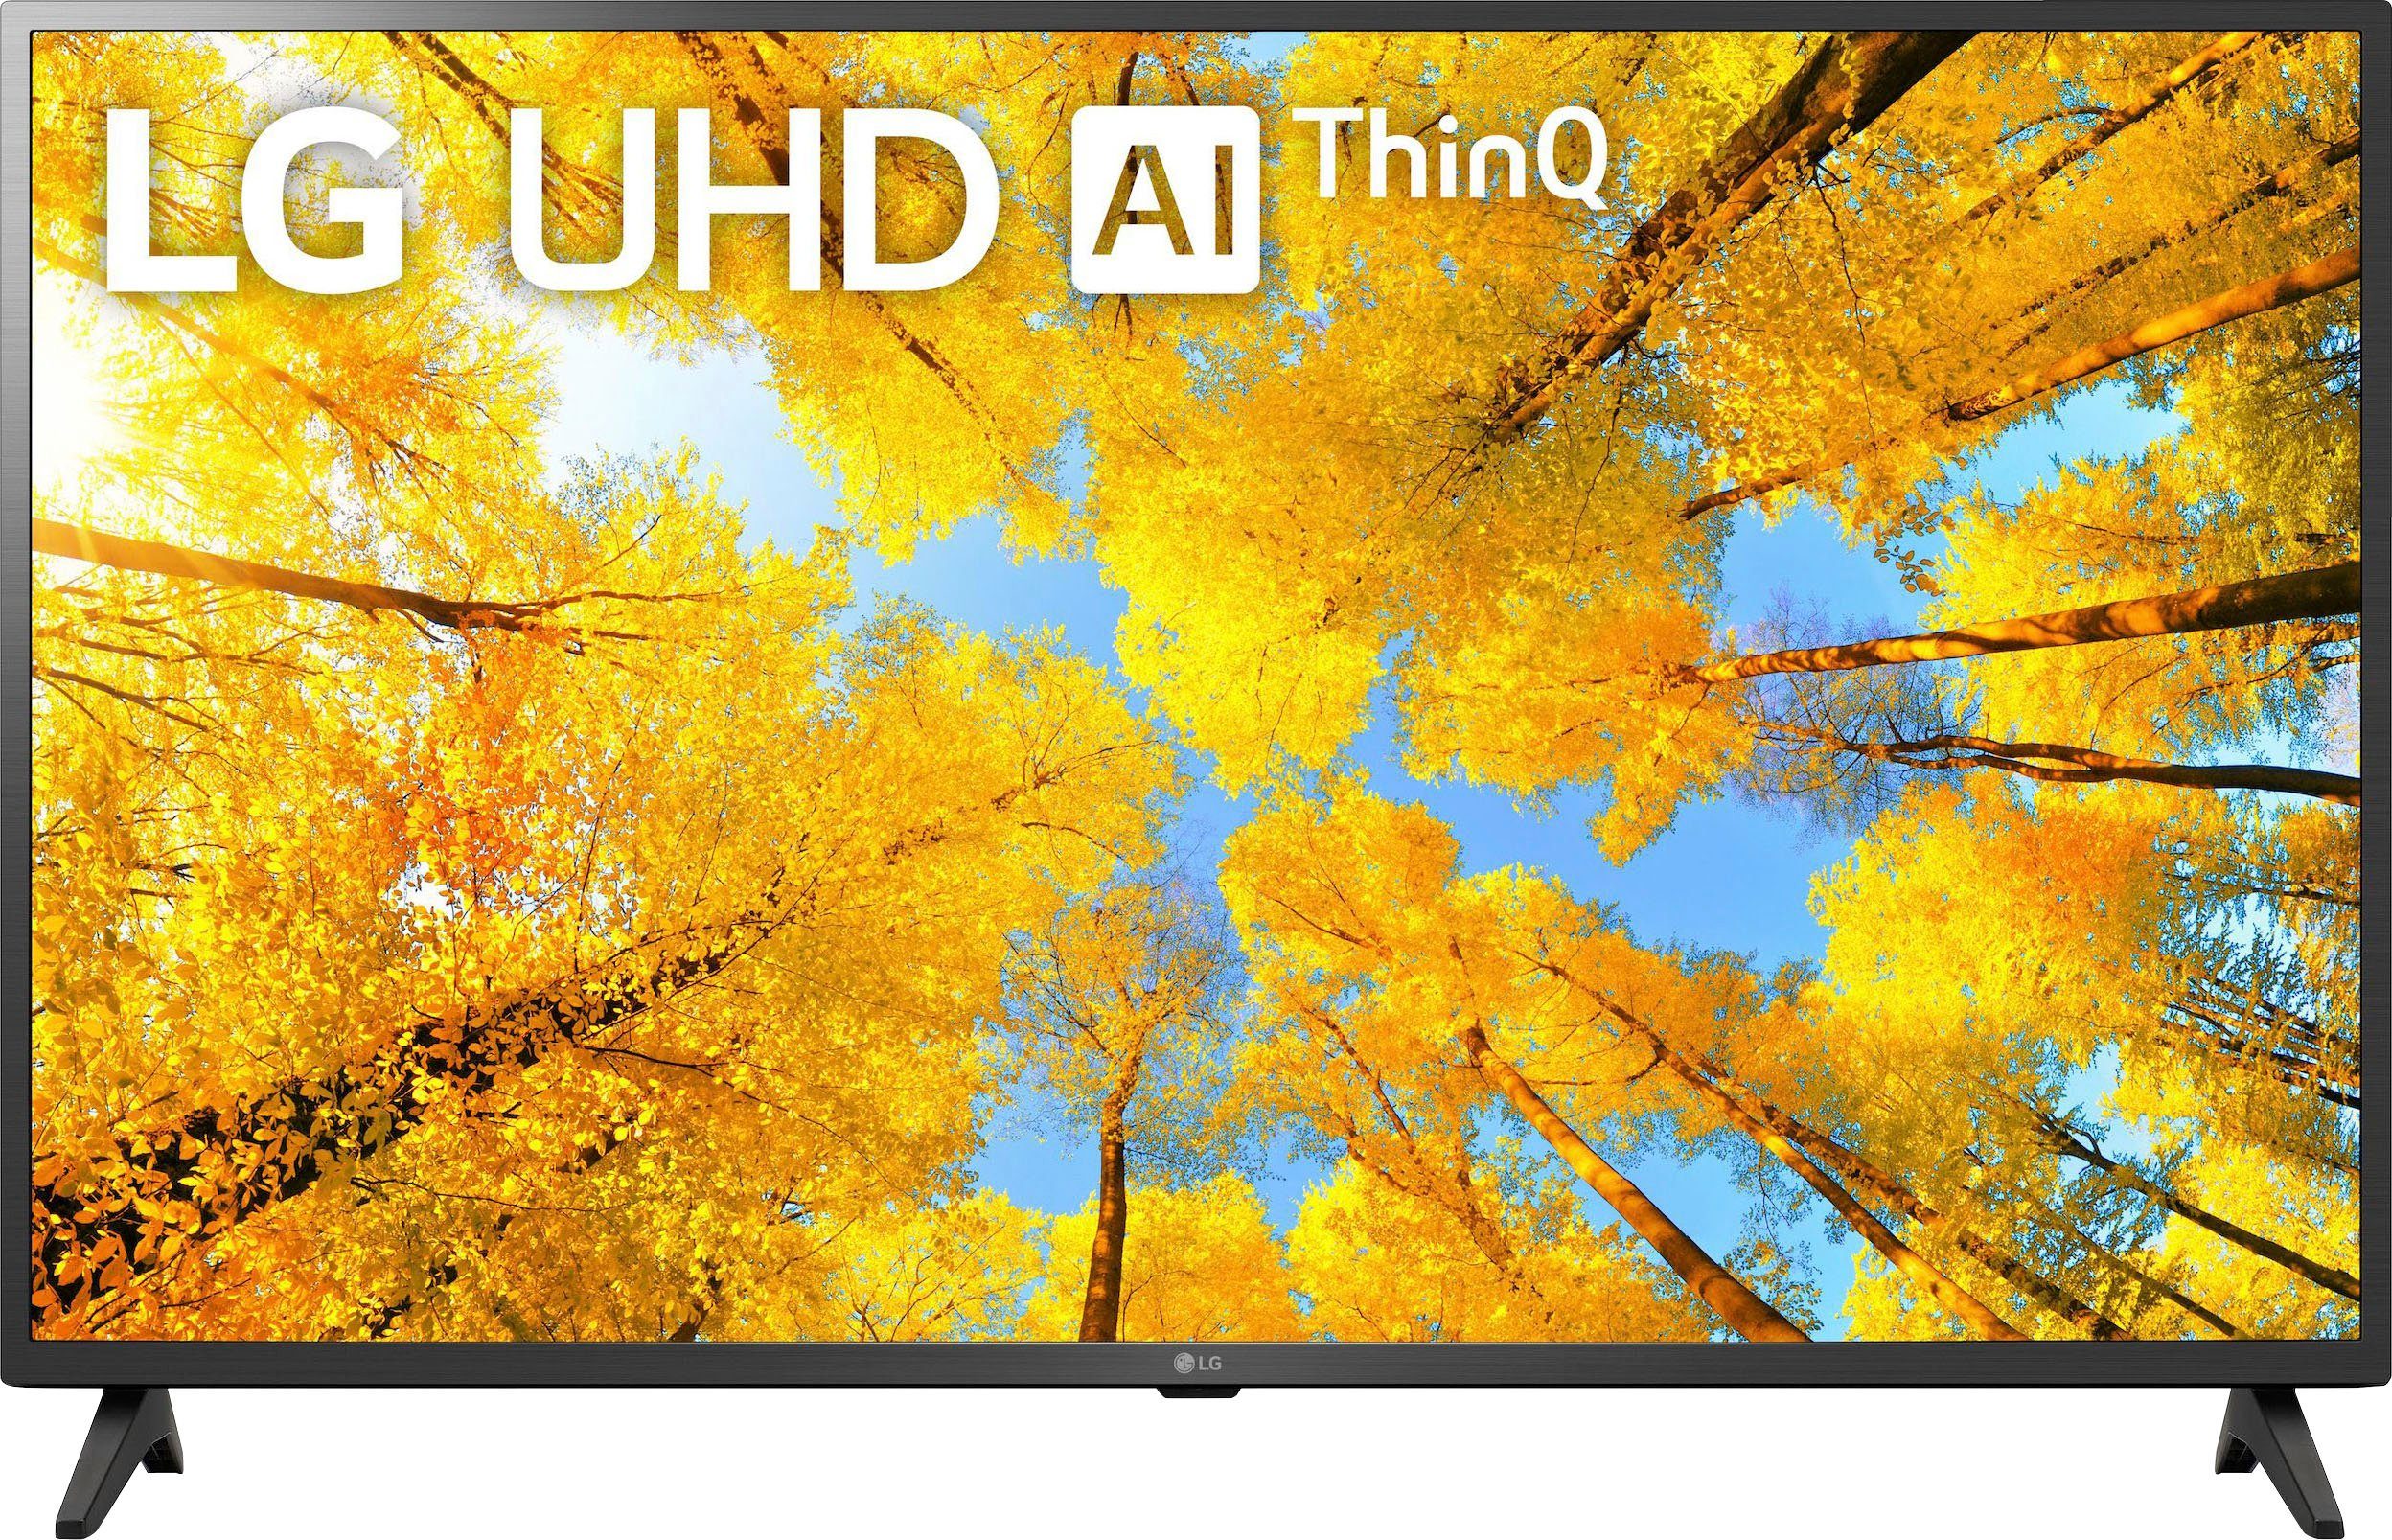 LG OLED Fernseher online kaufen » LG OLED TVs | OTTO